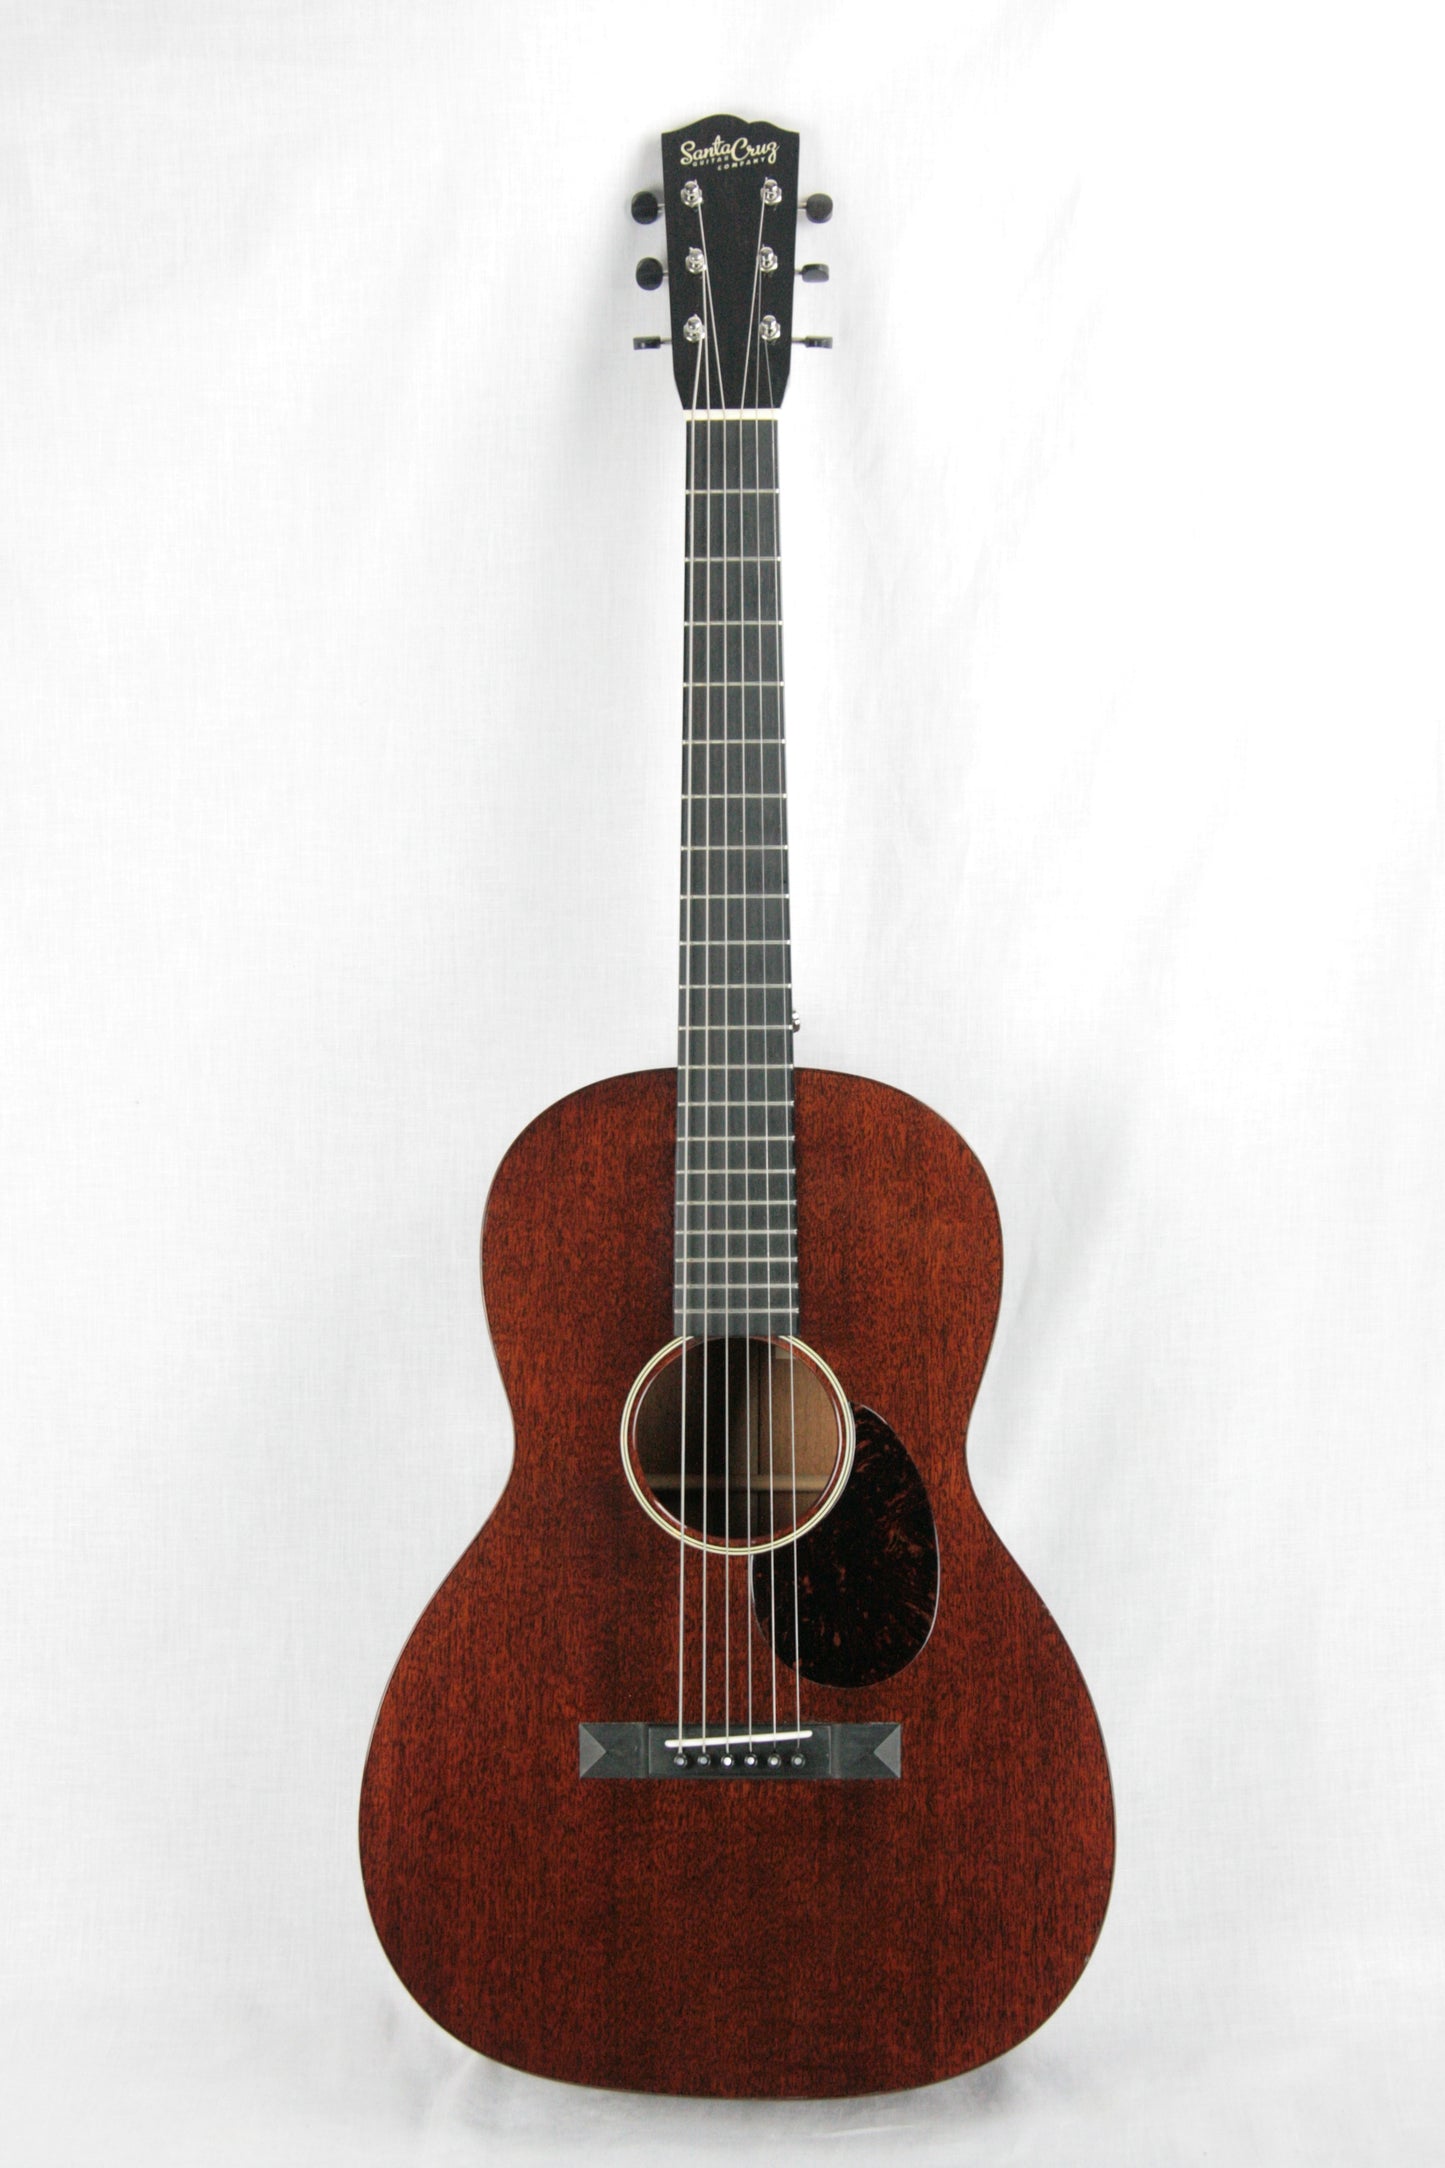 2010 Santa Cruz 1929 00 All Mahogany Acoustic Guitar! Prewar style oo 0 om